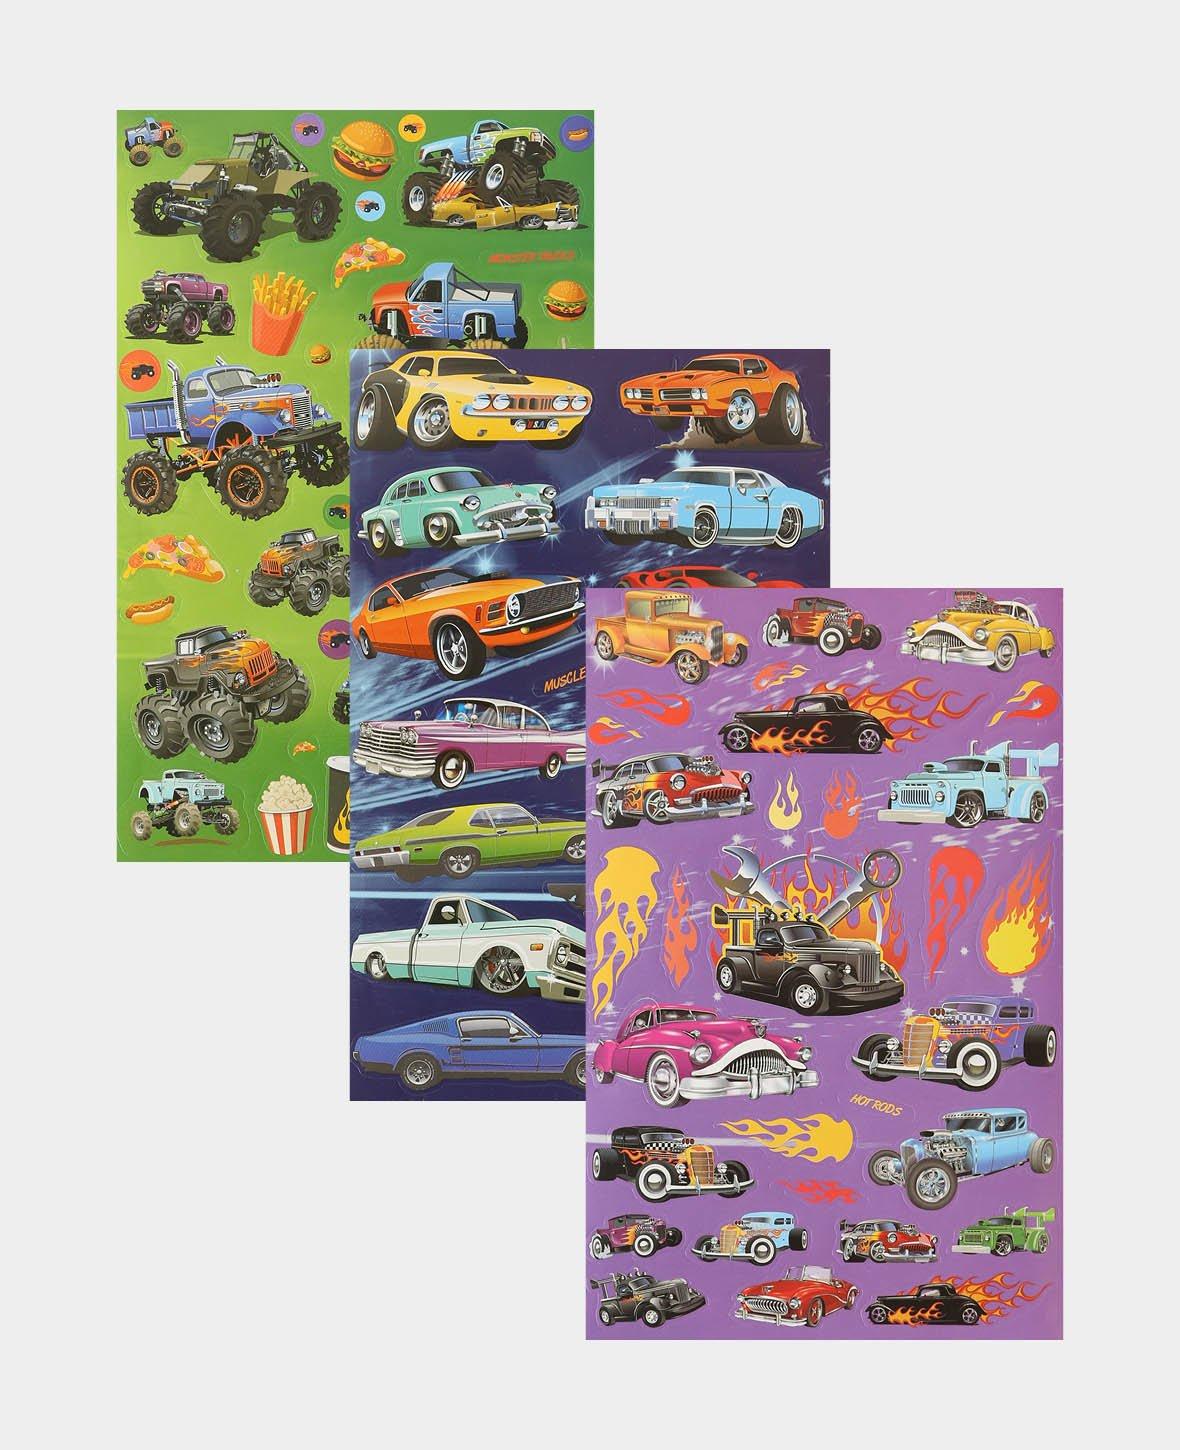 I am Creative  I am Creative Stickerbuch Cars autocollant décoratif Multicolore 200 pièce(s) 